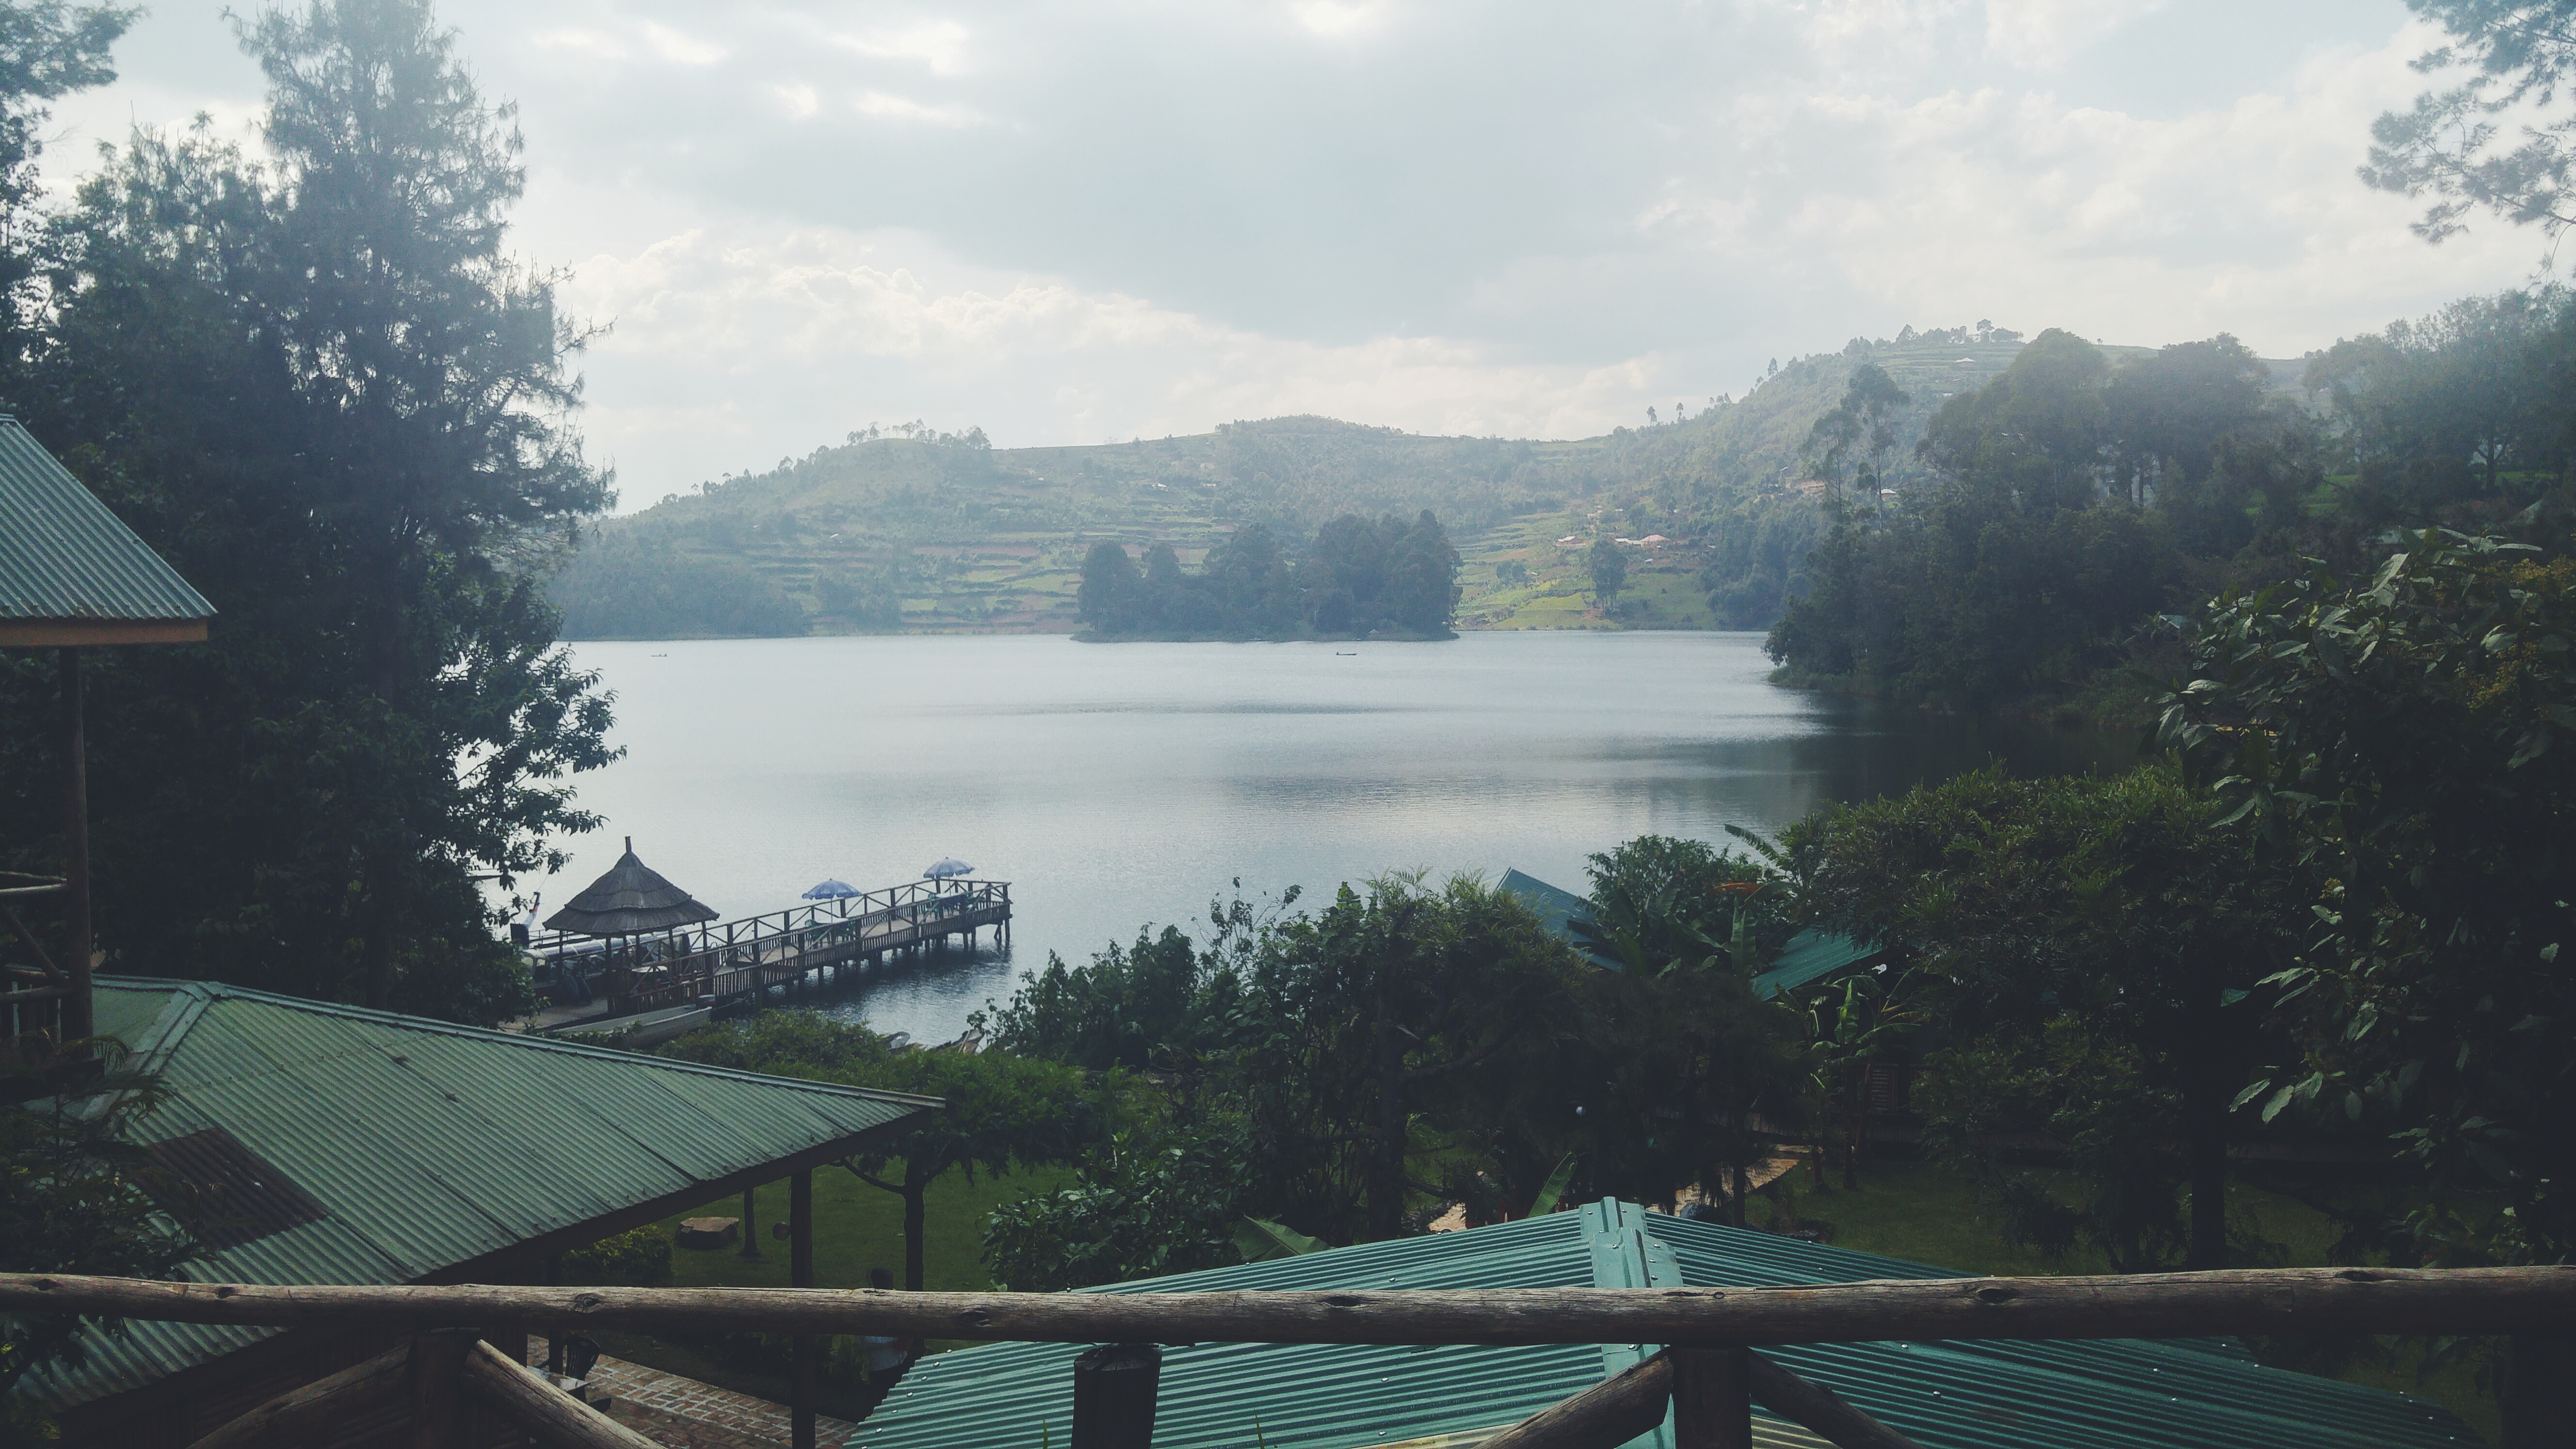 Lake Bunyonyi, Uganda